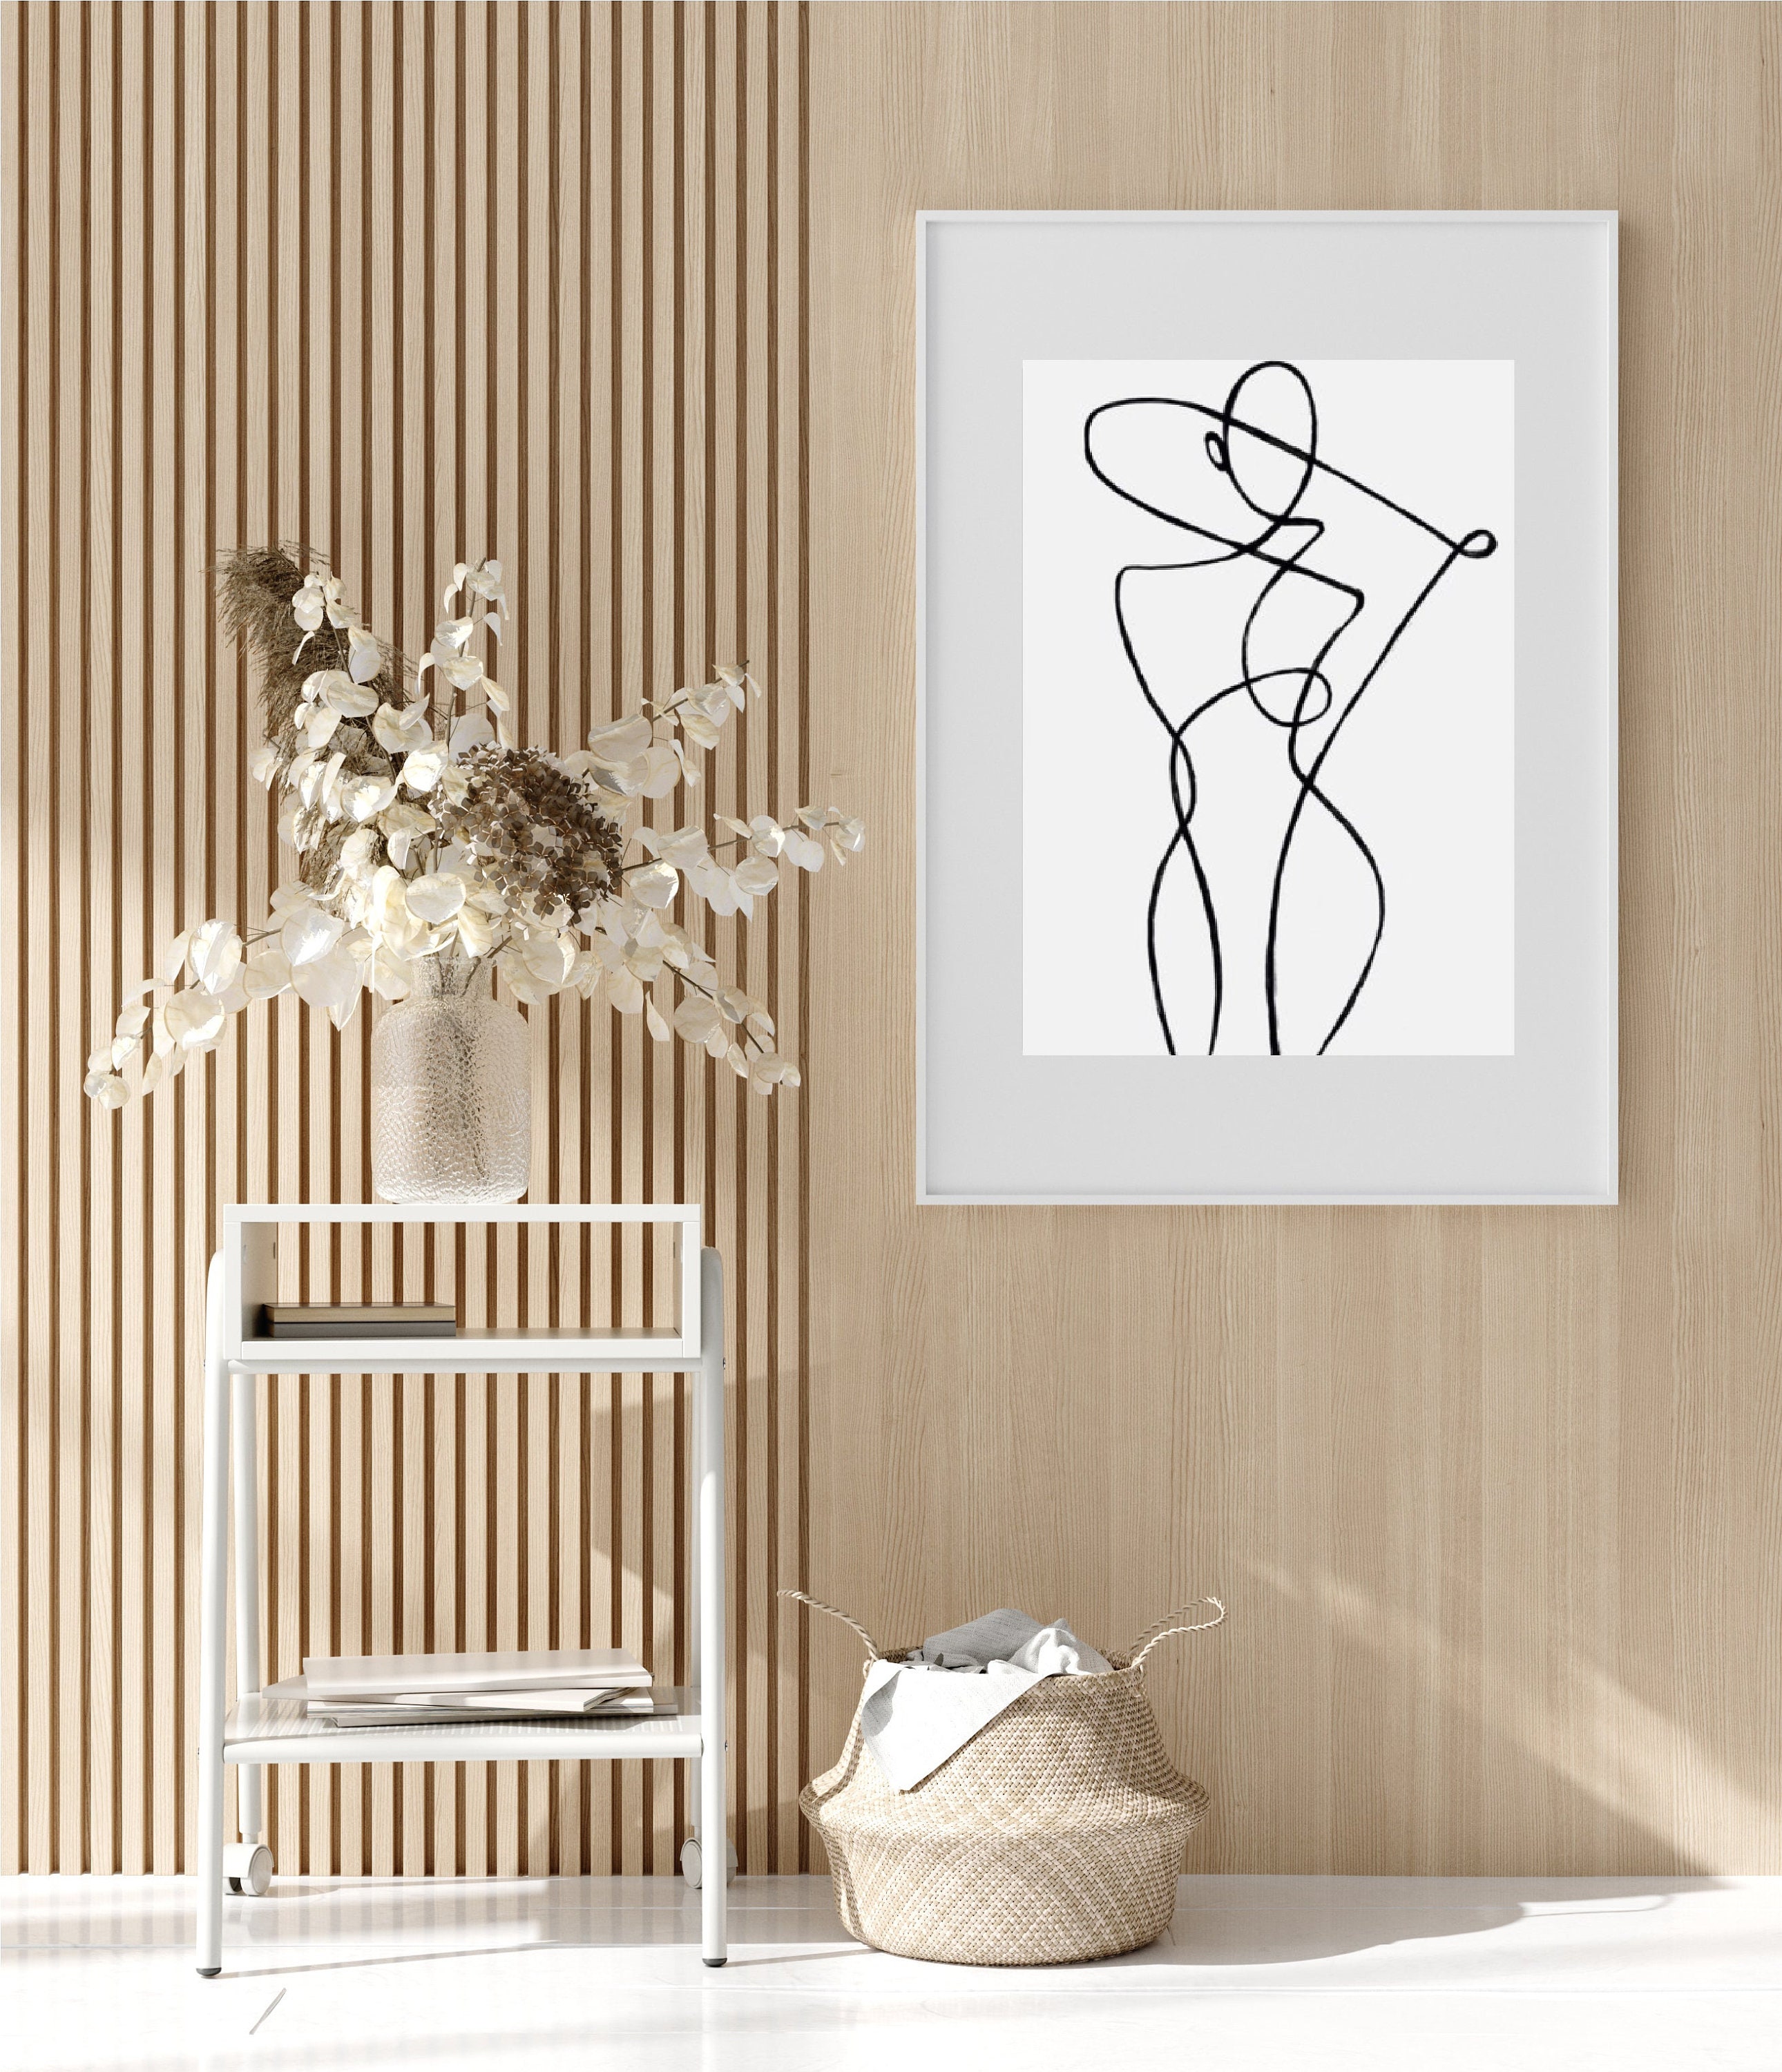 High Fashion Woman Poster Print A4 A3 Wall Art Decor Home Salon Pink 1437 